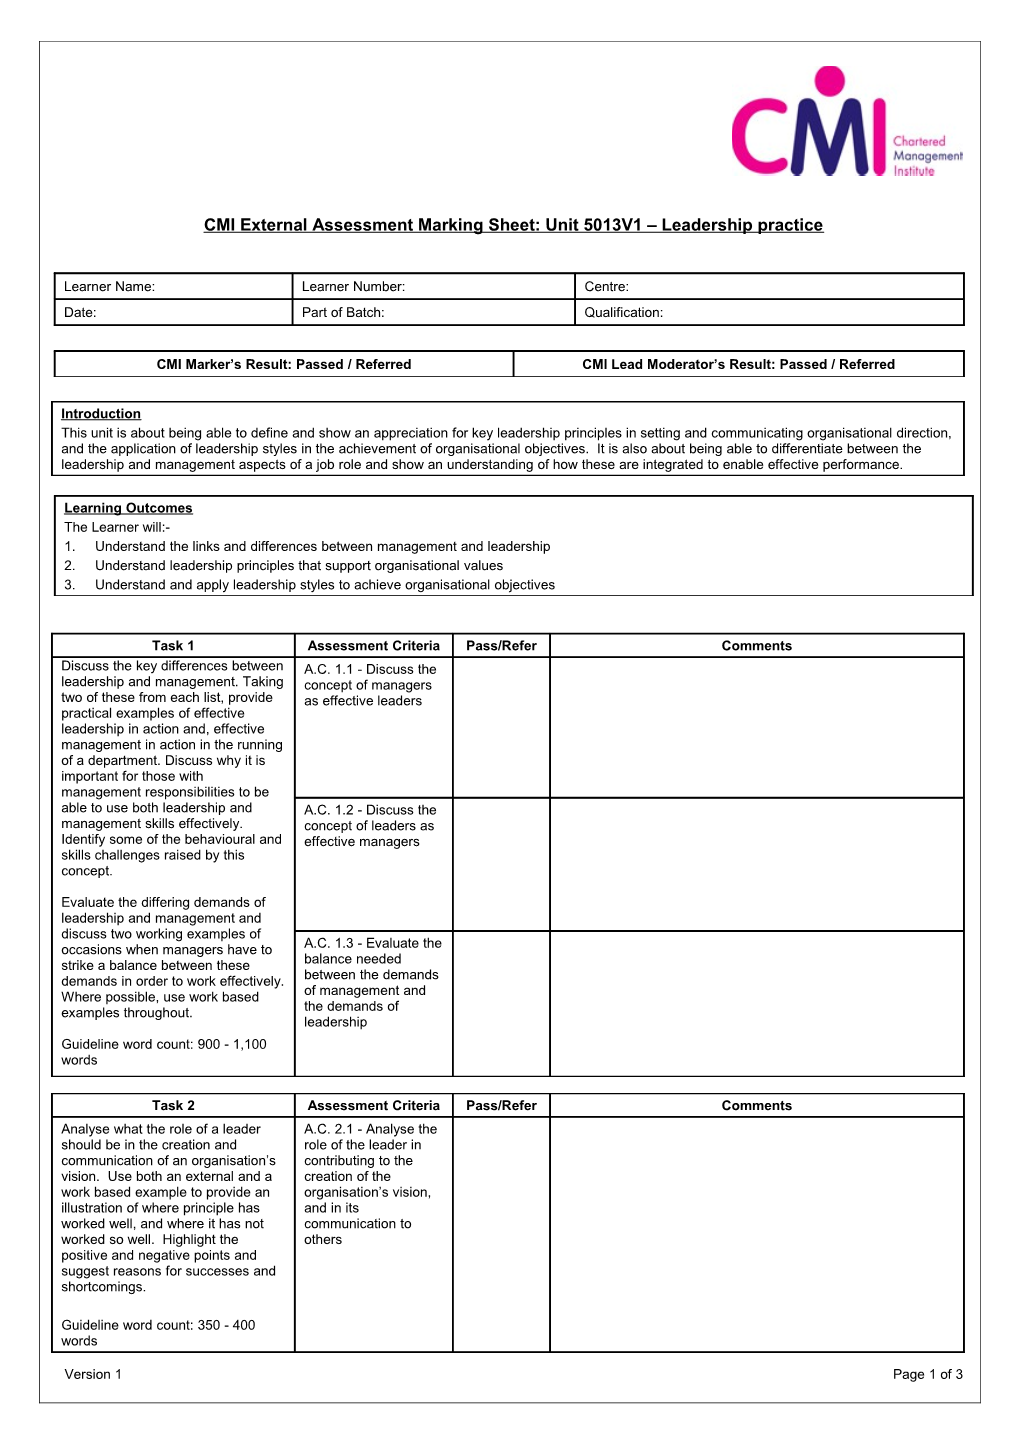 CMI External Assessment Marking Sheet: Unit 5013V1 Leadership Practice